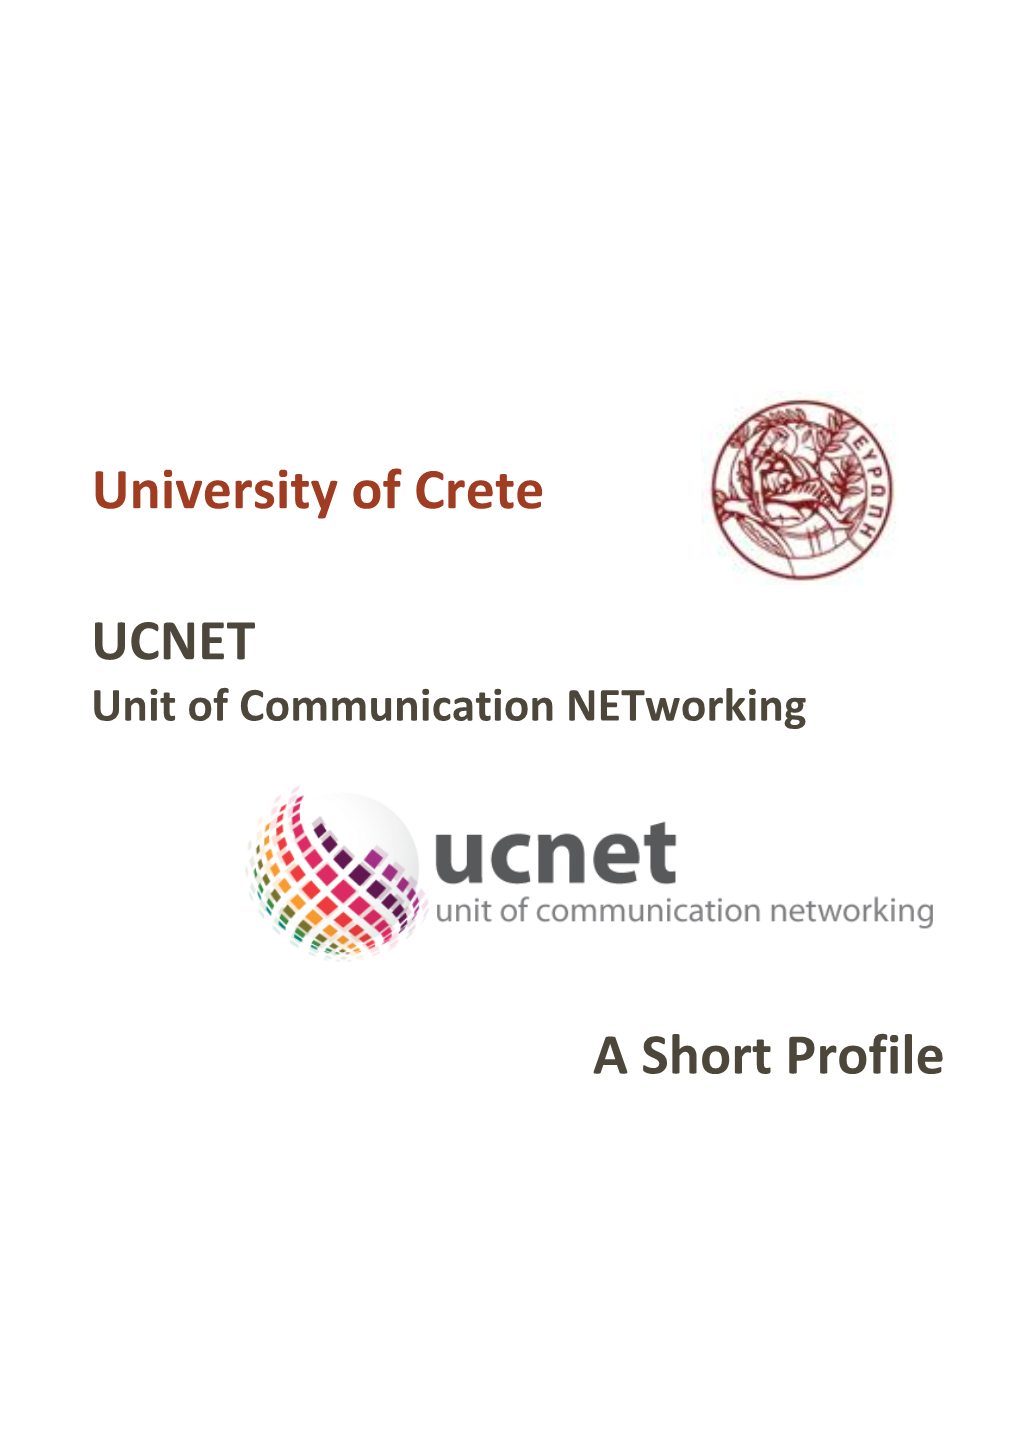 University of Crete UCNET a Short Profile